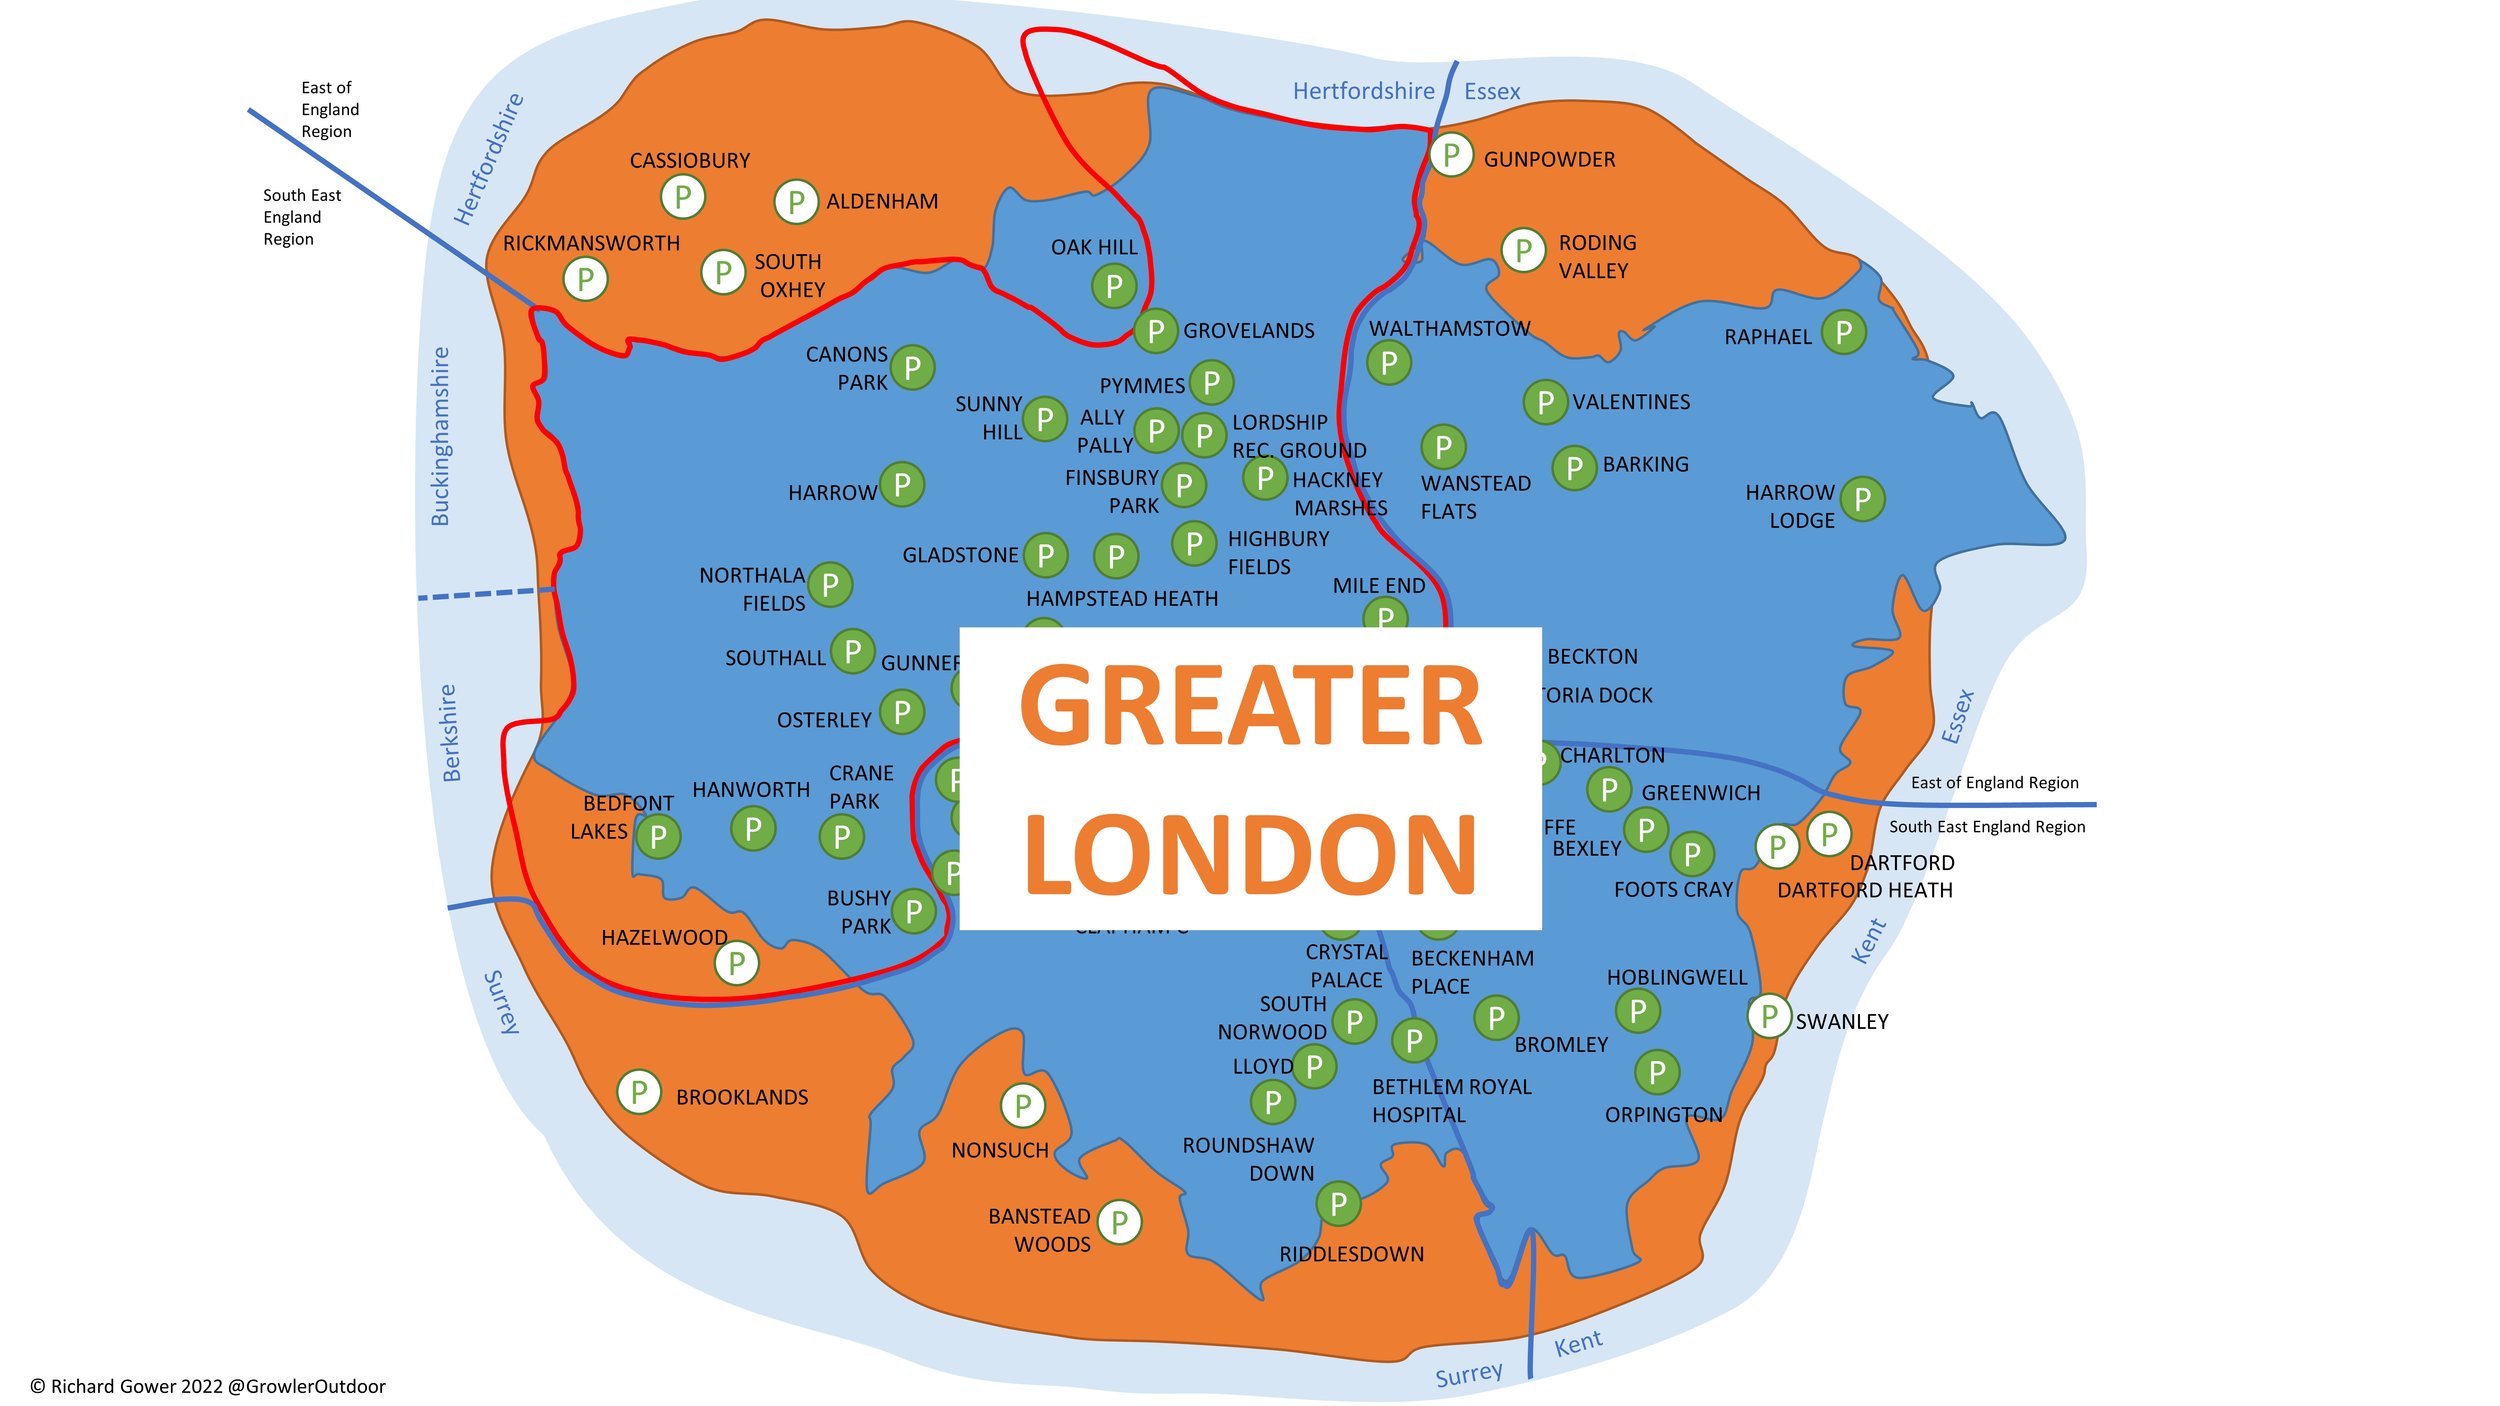 Greater London (LonDone)